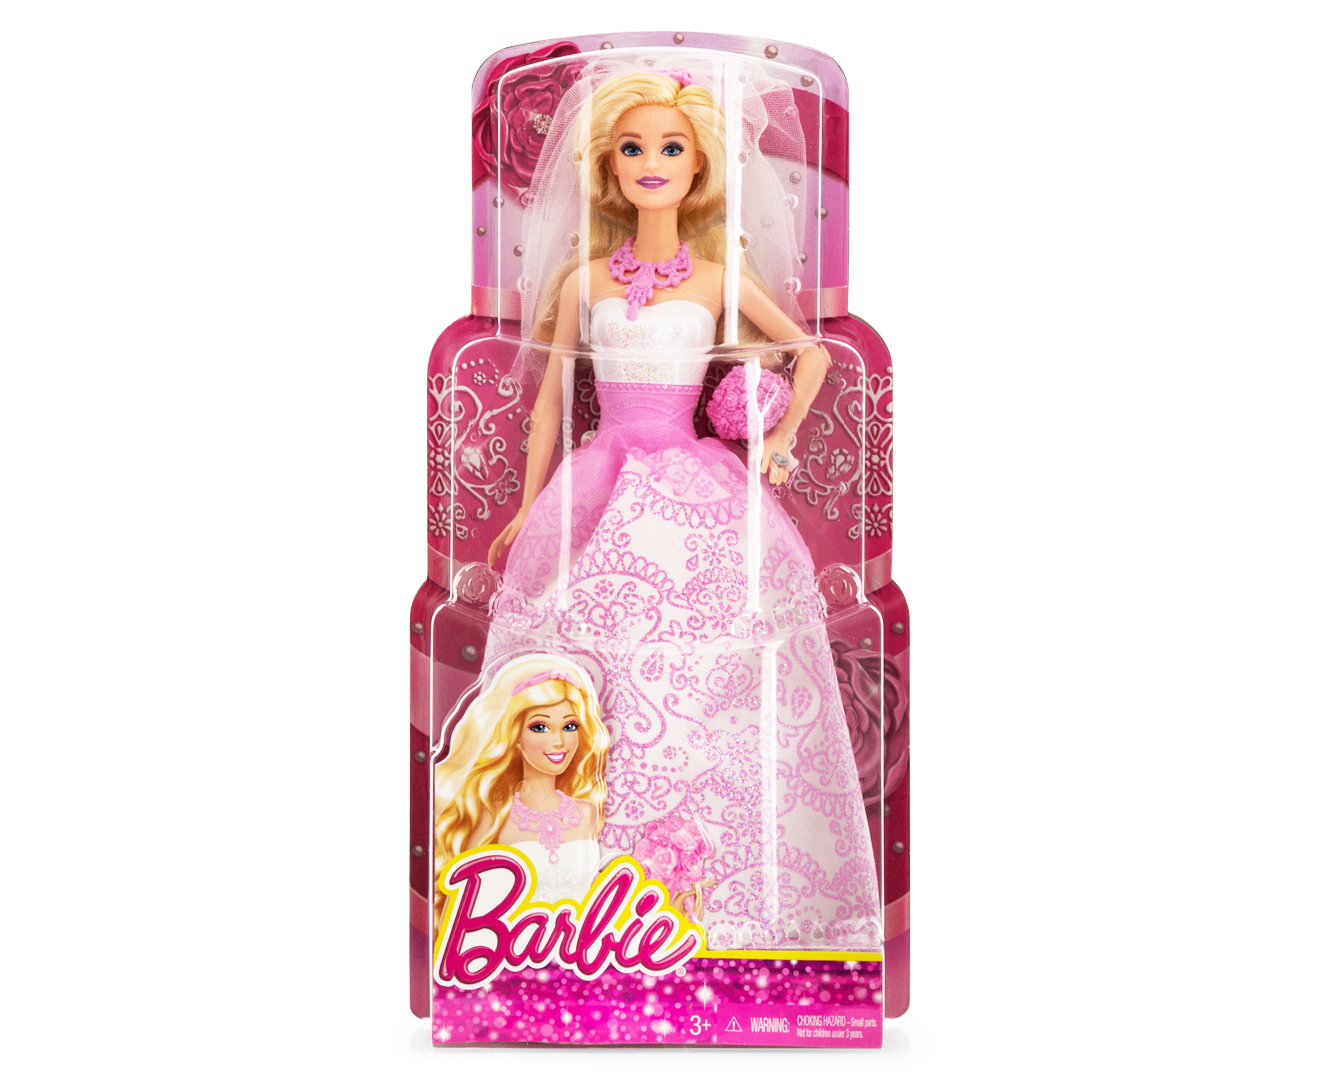 Barbie Fairytale Bride Doll - Pink | Catch.co.nz